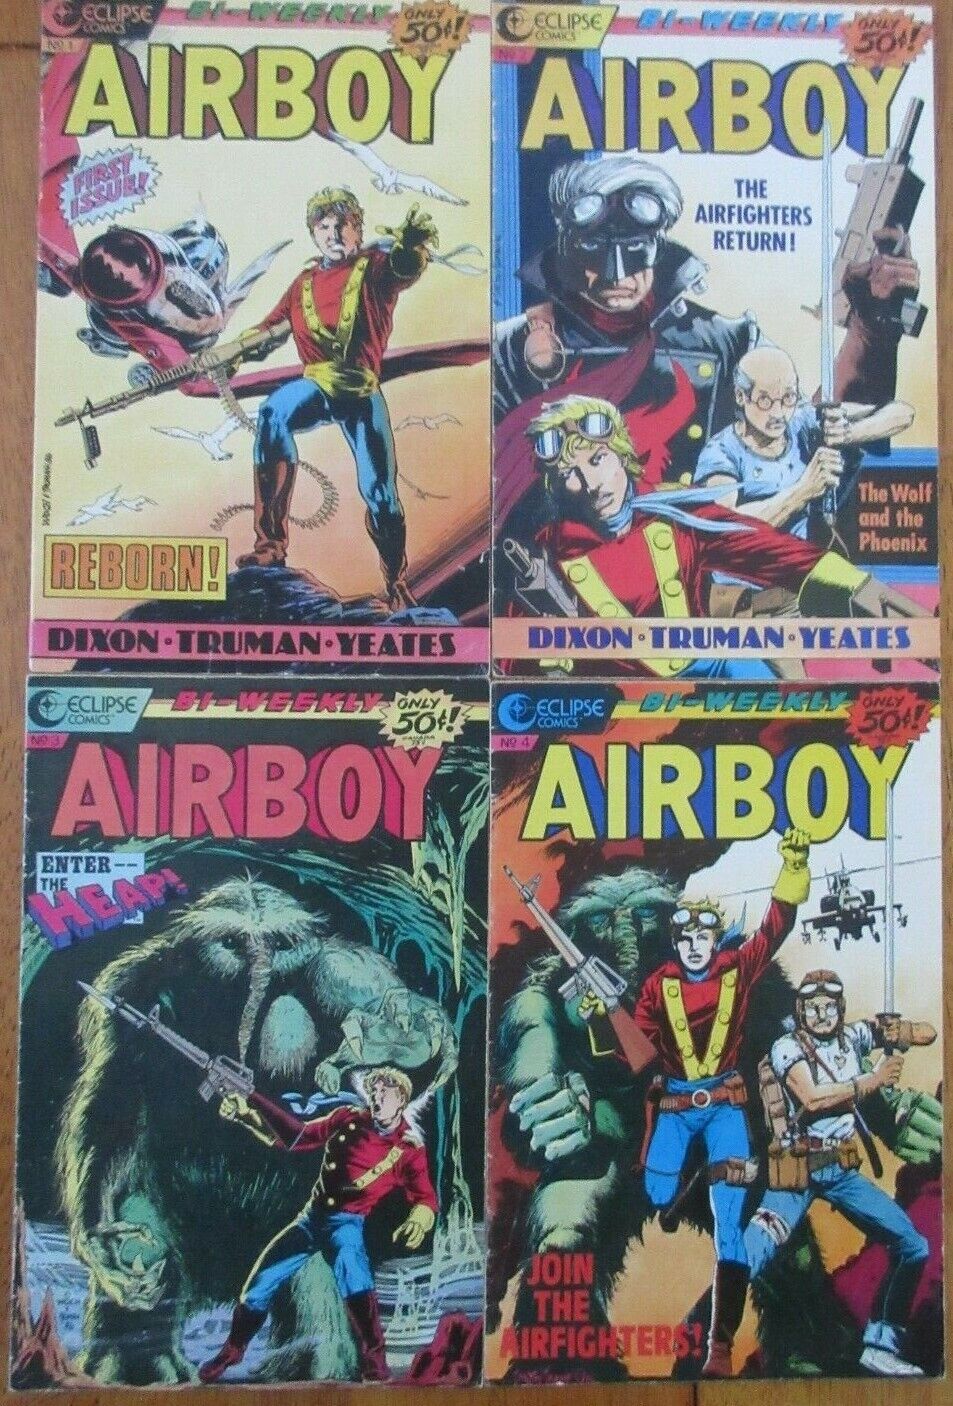 Airboy #1-4 Eclipse 1986 Comic Books